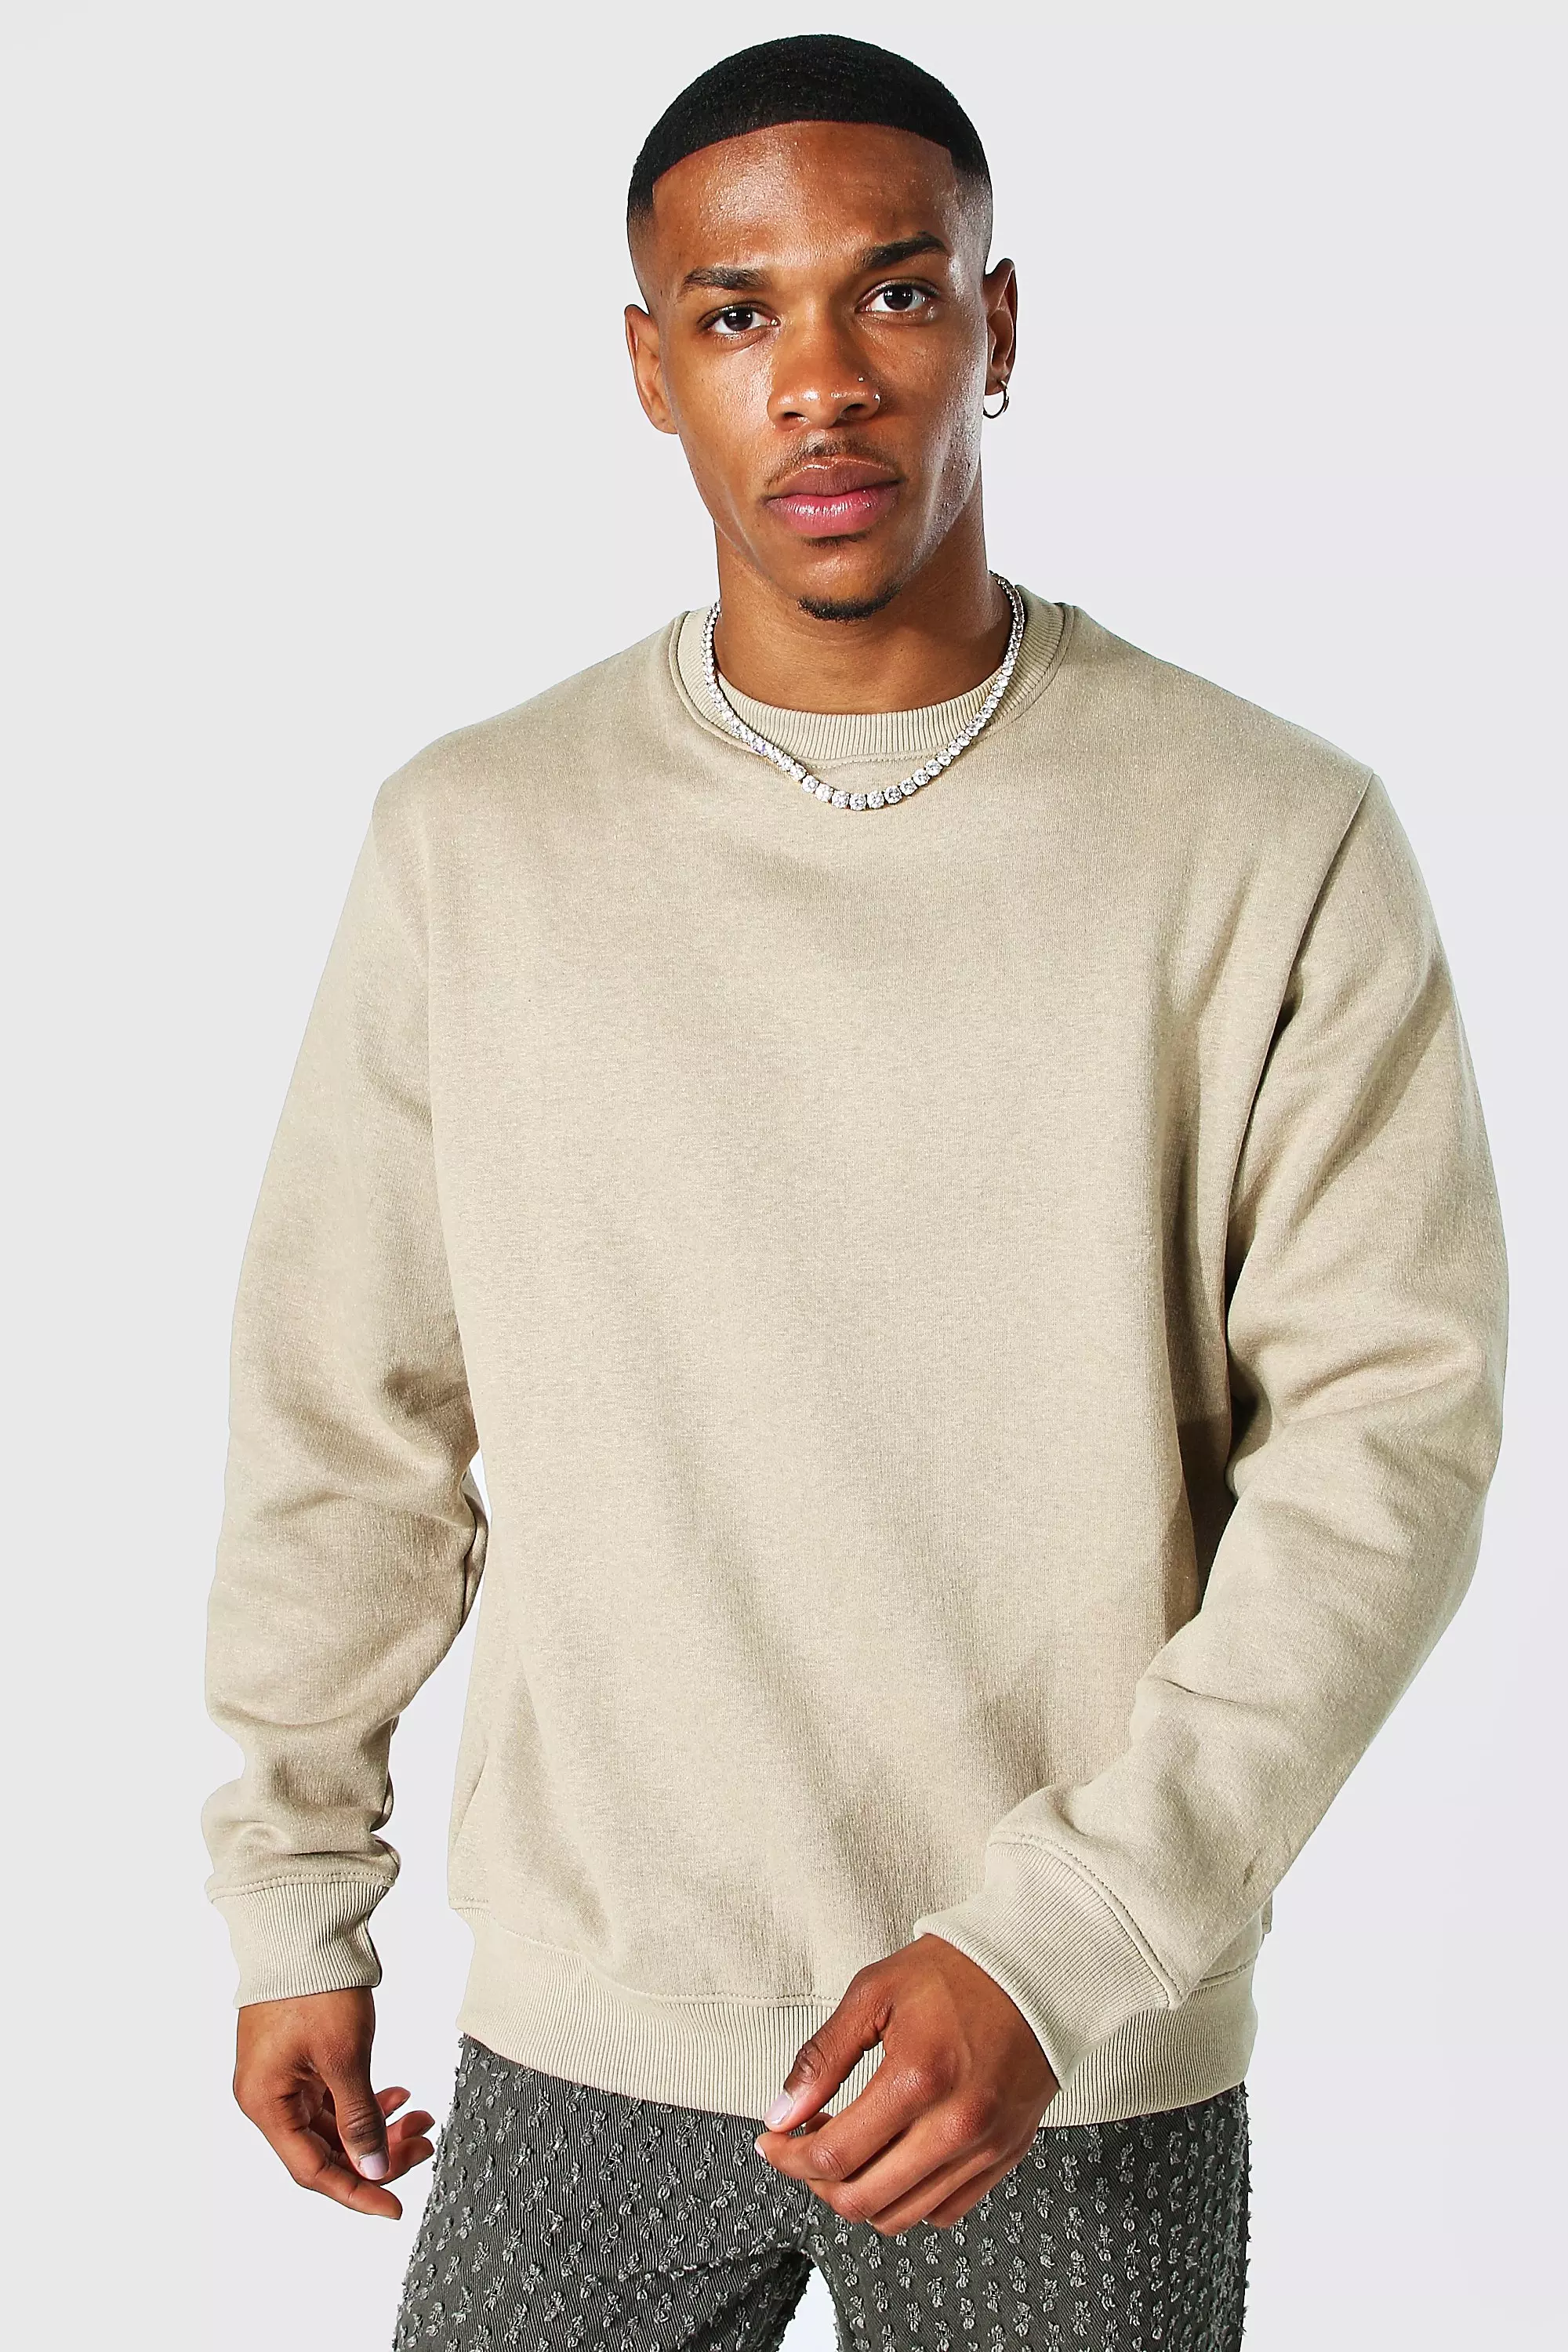 Men's Basic Sweatshirts